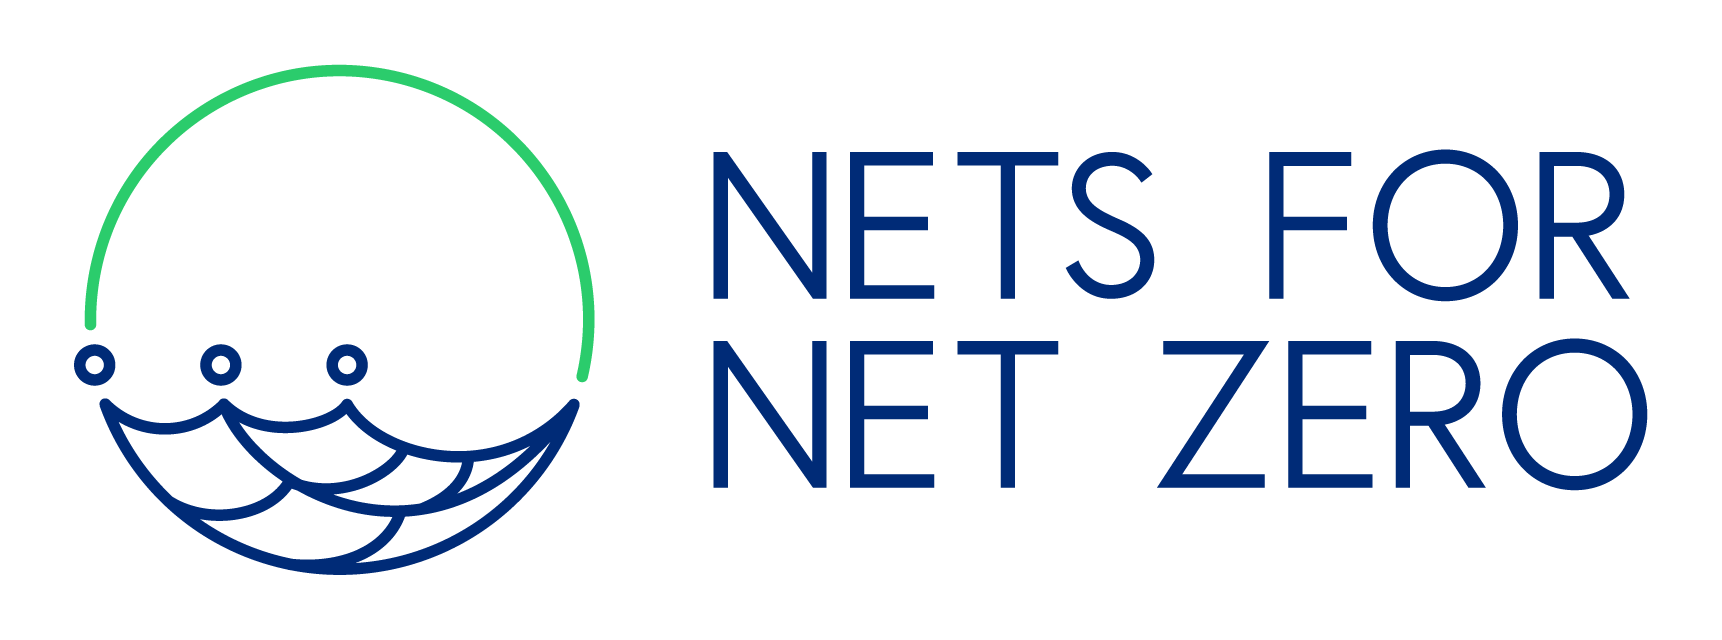 Nets for Net Zero Logo